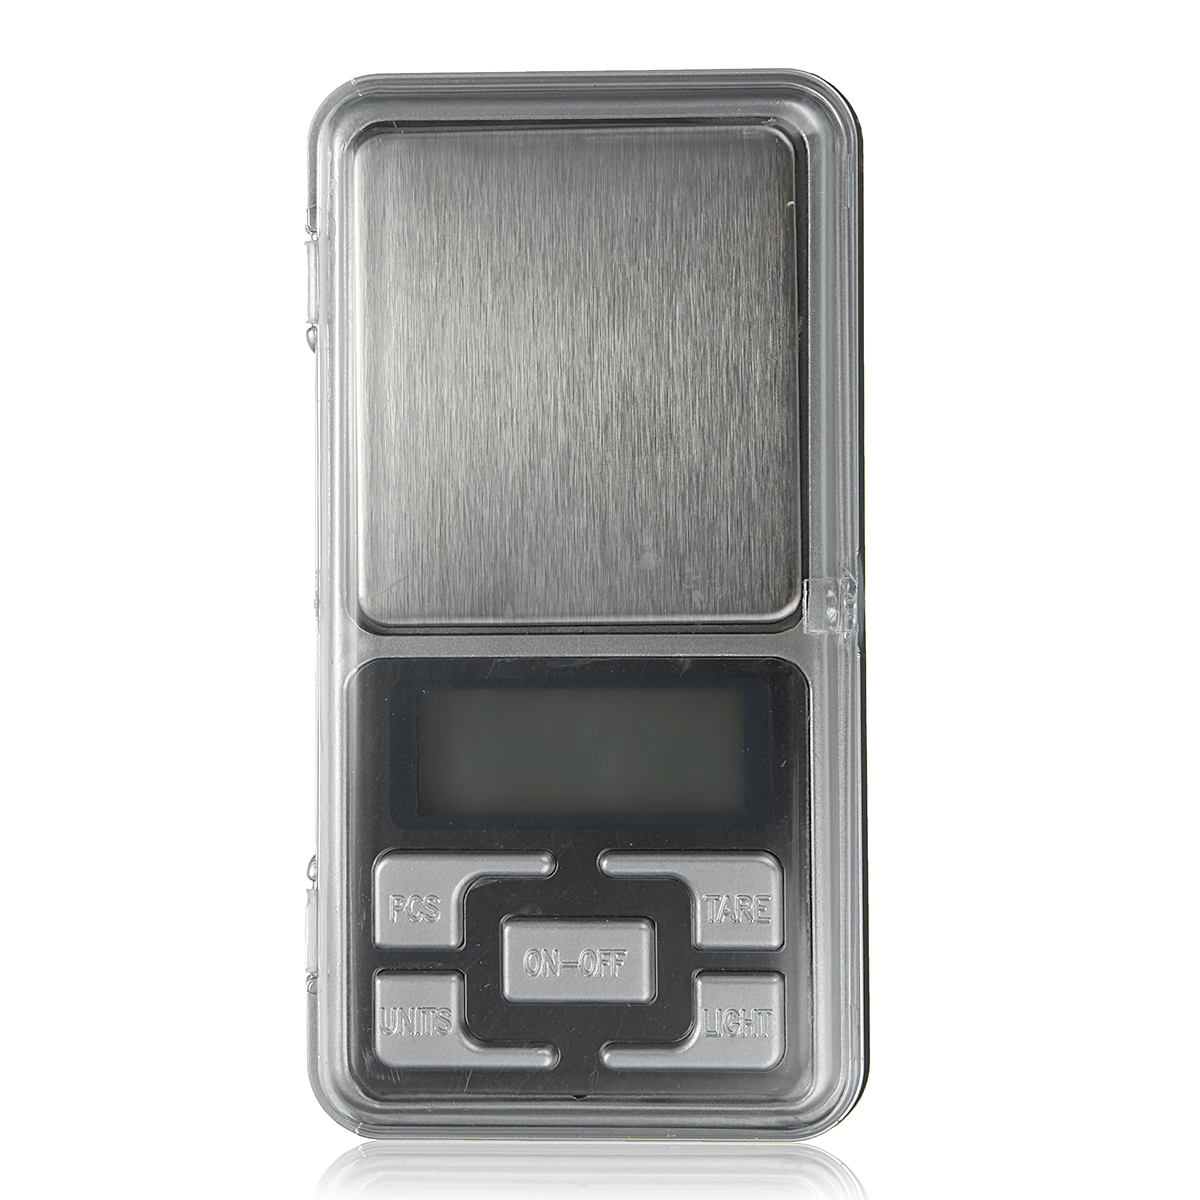 

Mini Digital Pocket 500g/0.1g 200g/0.01g Jewellery Scales Electronic Precision Weight Balance